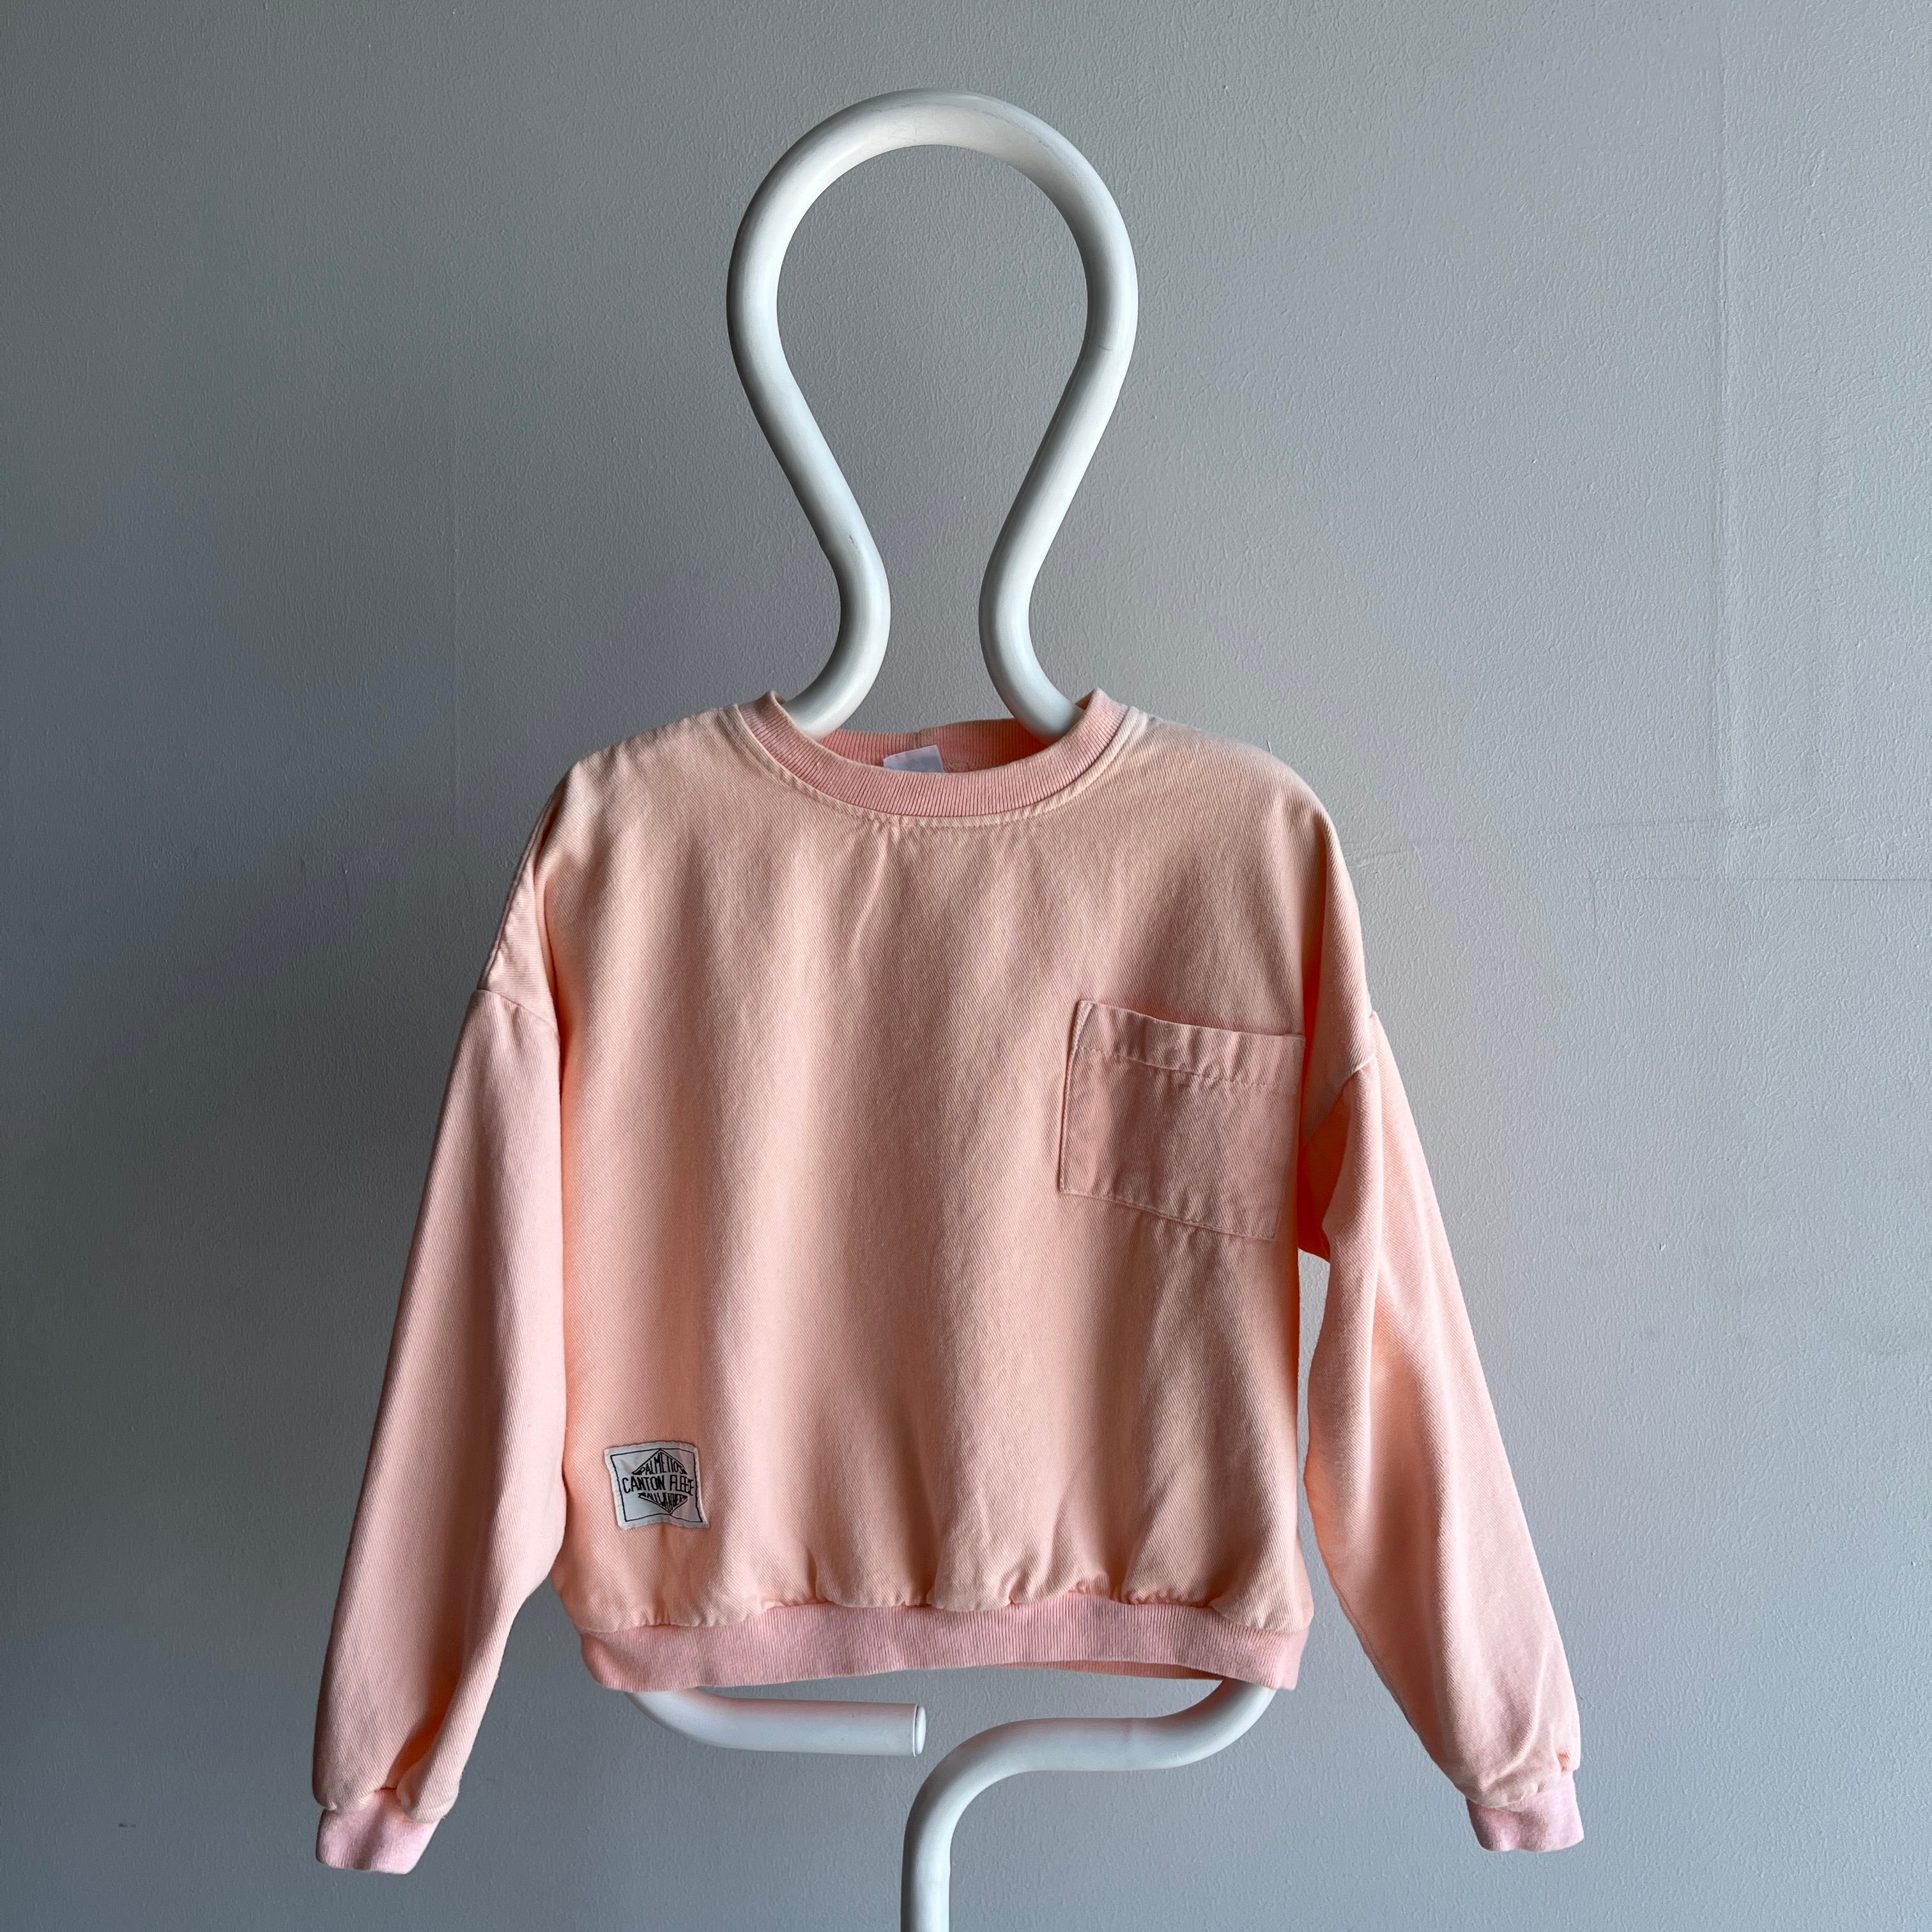 1980s Palmetto's Peachy Super Cool Sweatshirt/Shirt